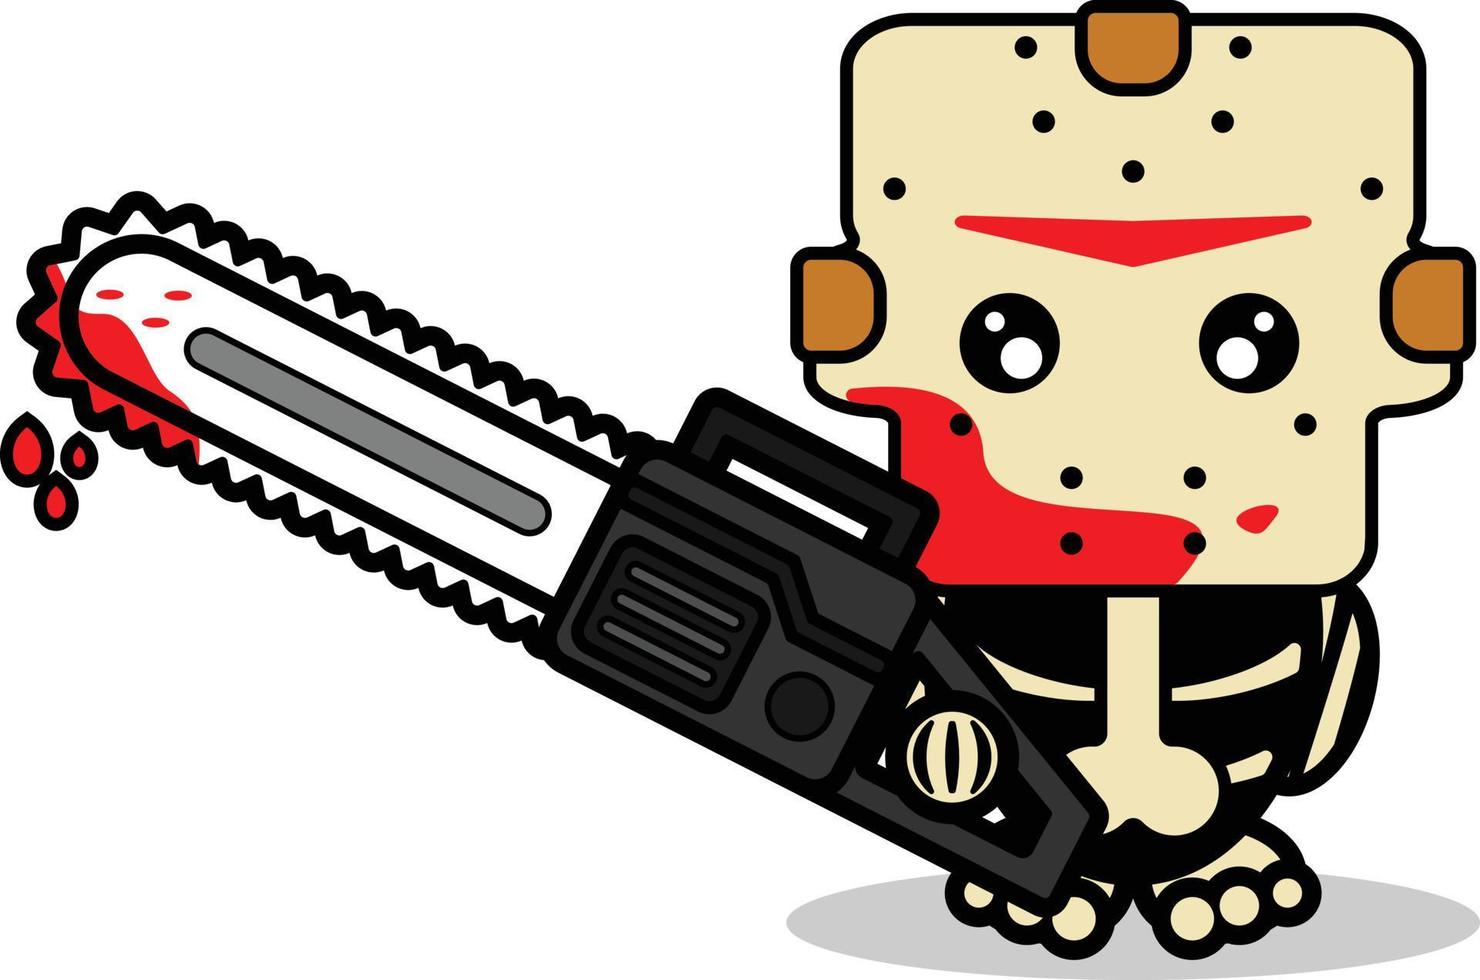 cute jason voorhees bone mascot character cartoon vector illustration holding bloody saw machine